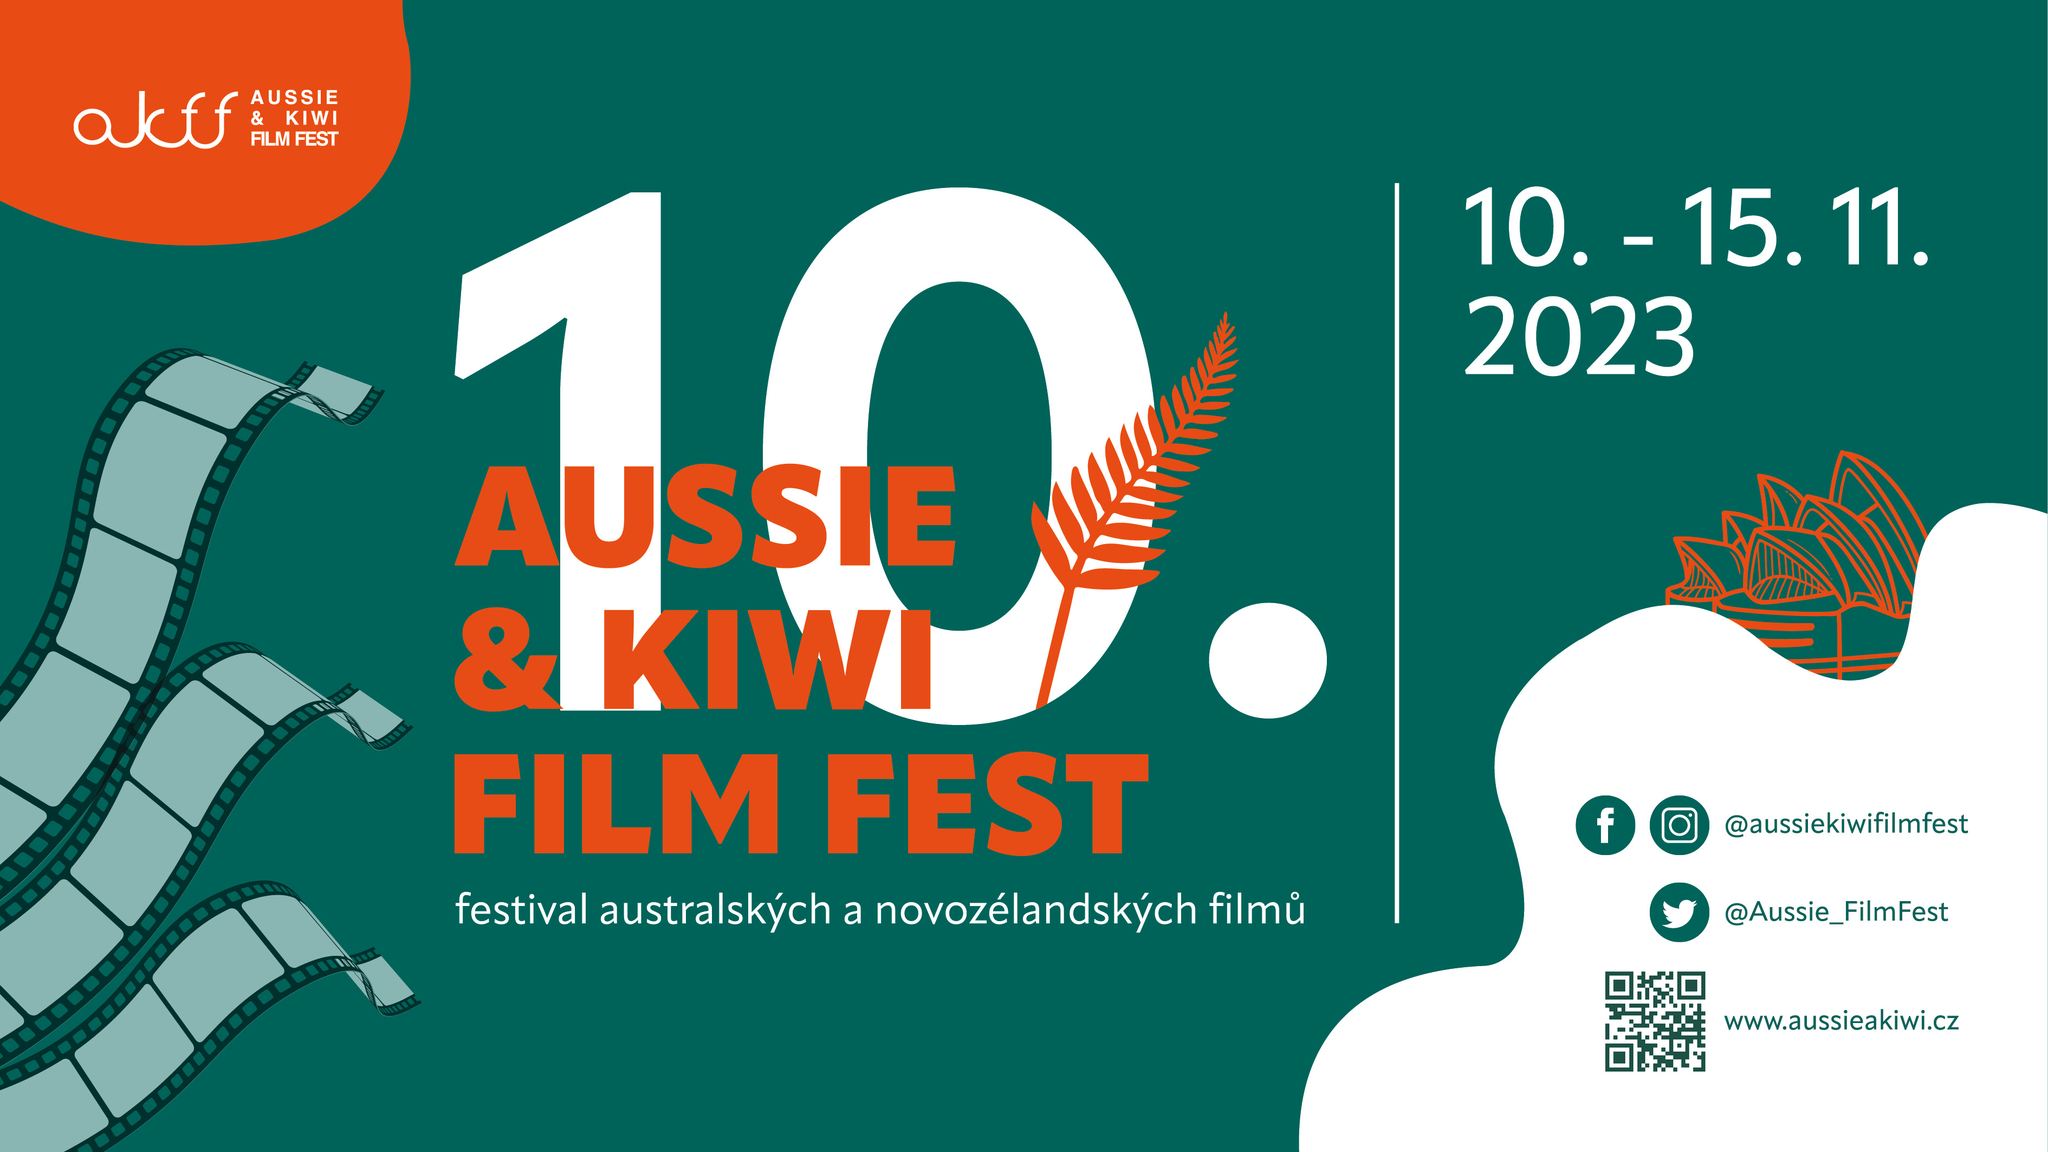 Aussie & Kiwi Film Fest